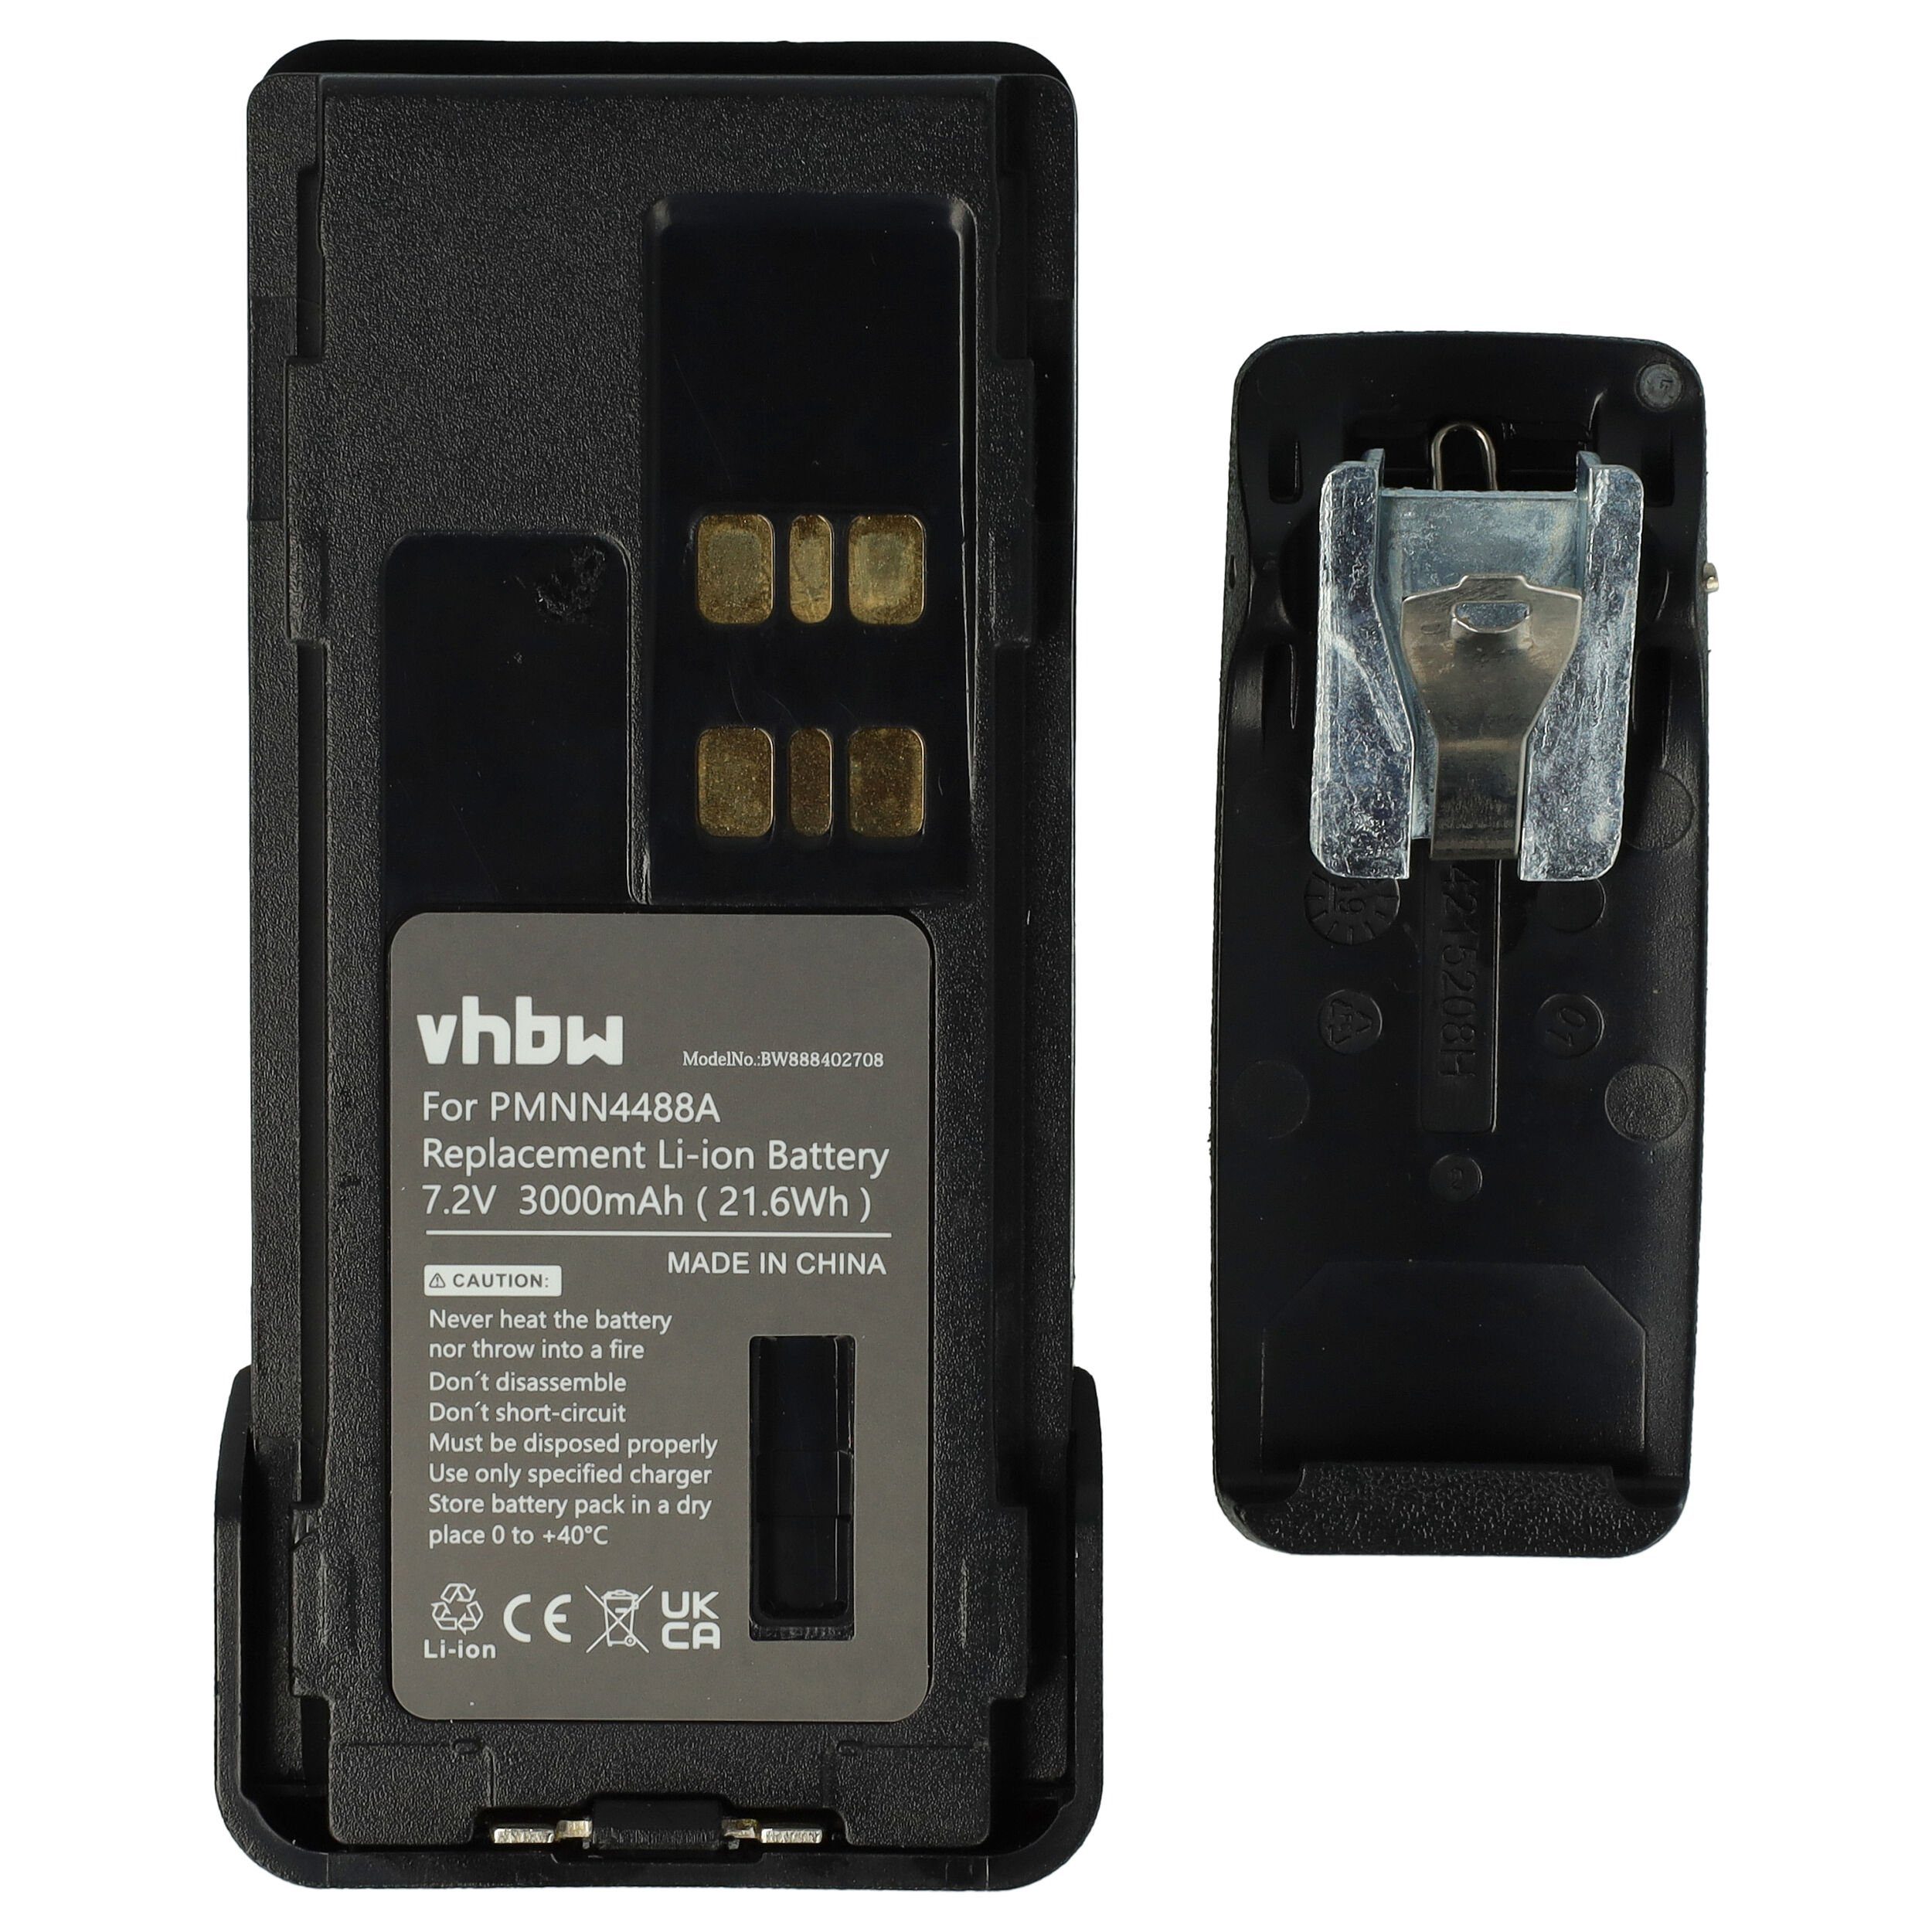 vhbw passend für Motorola DP4401e, DP4600e, DP4601e, DP4401, DP4600, DP4601 Akku 3000 mAh